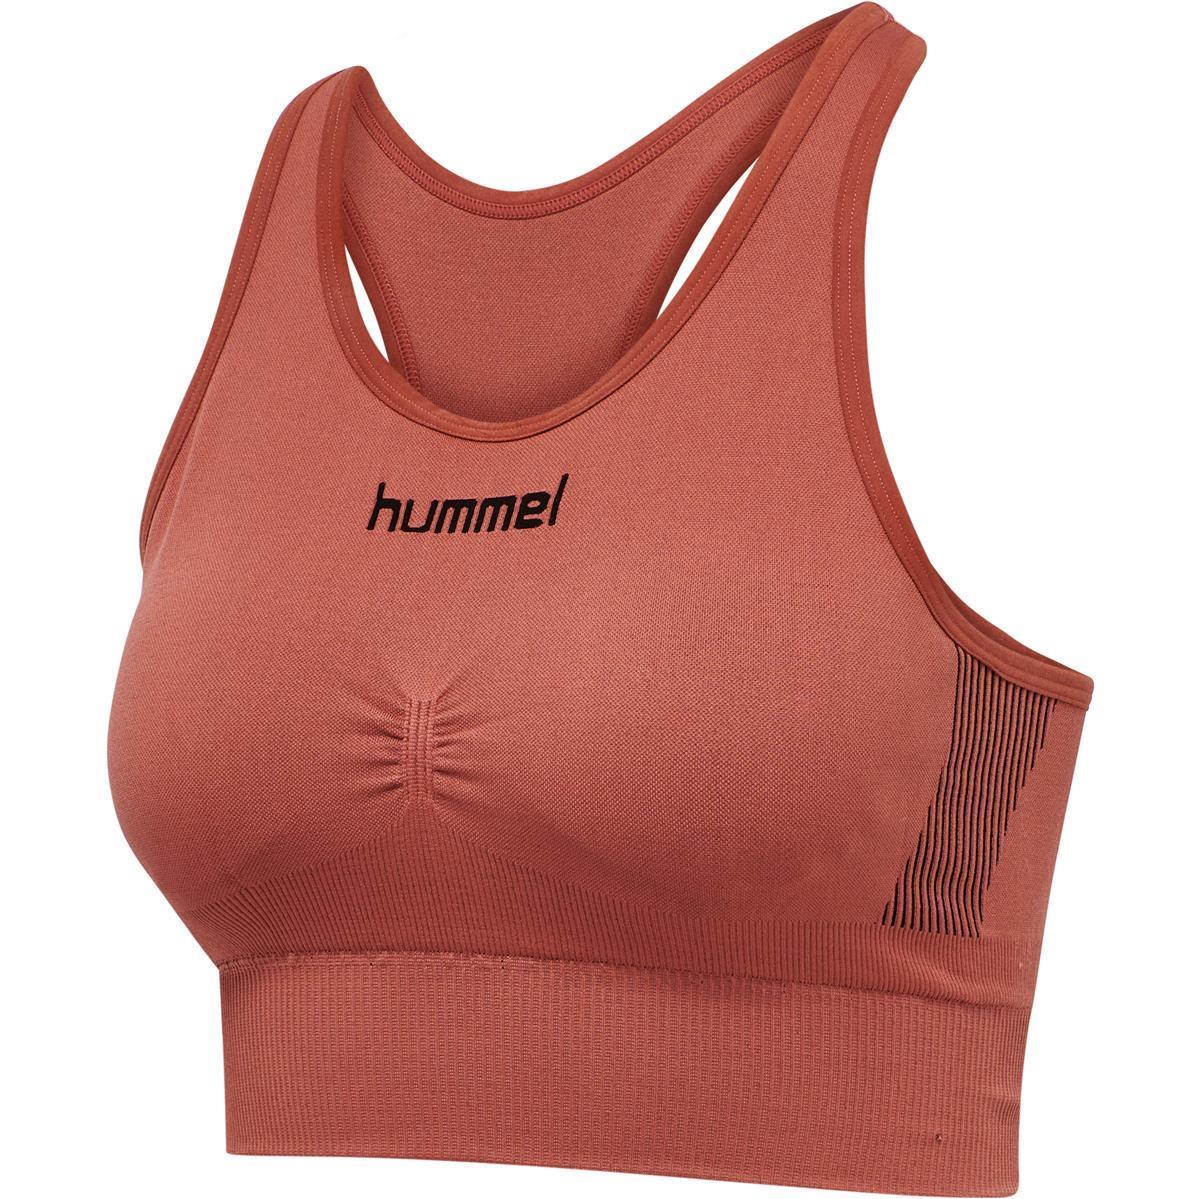 Hummel HUMMEL FIRST SEAMLESS BRA WOMAN - MARSALA - XL-2X